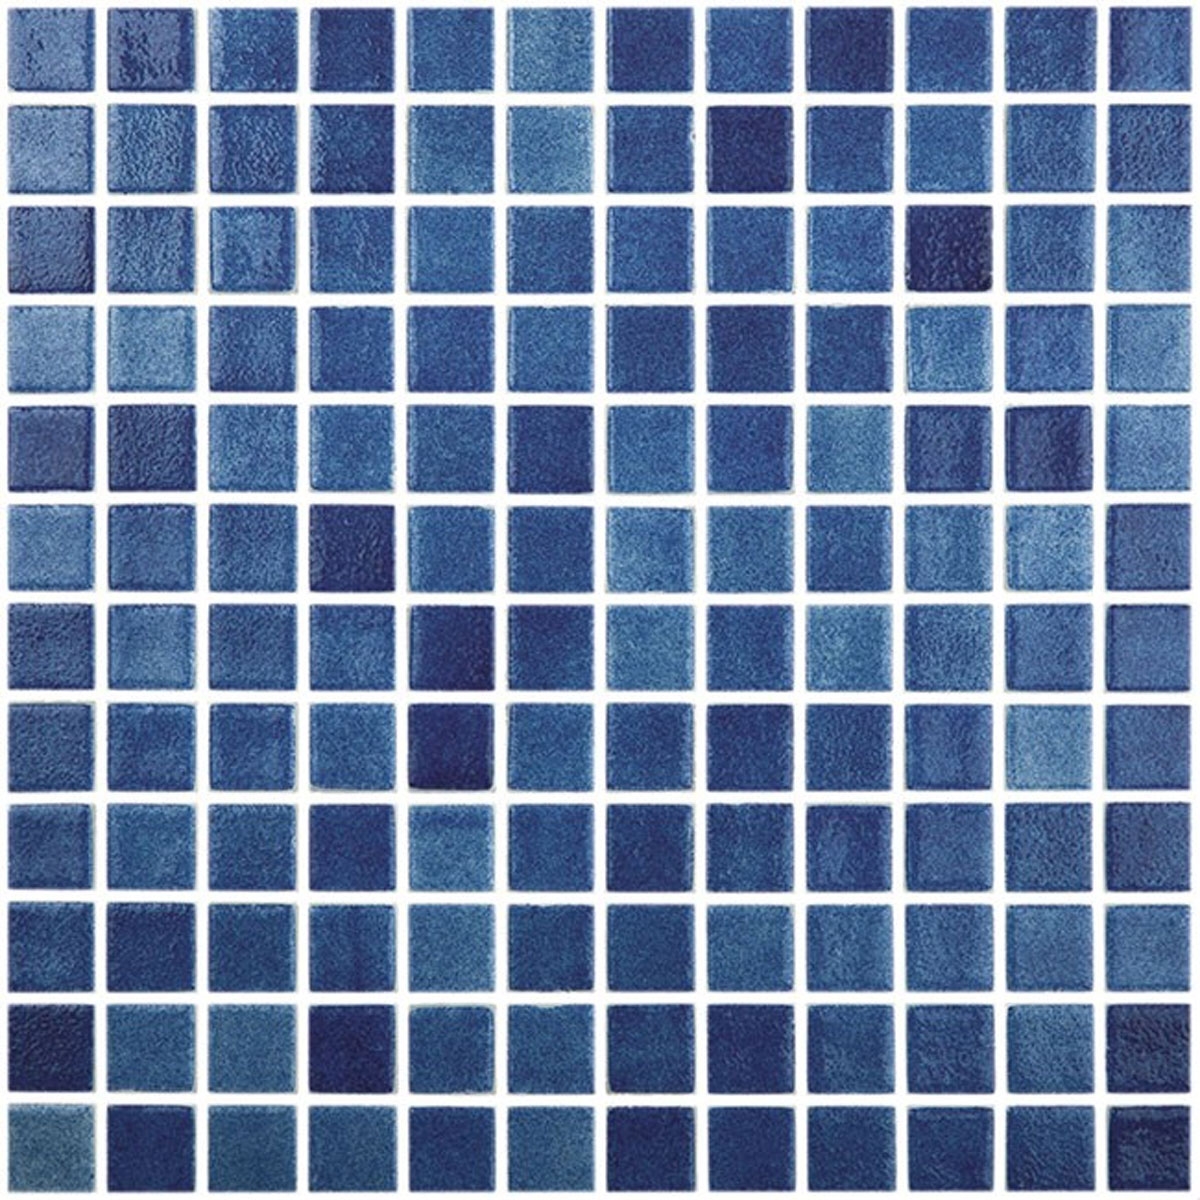 Imagen de Gresite antideslizante azul marino niebla (Caja 2 m2)